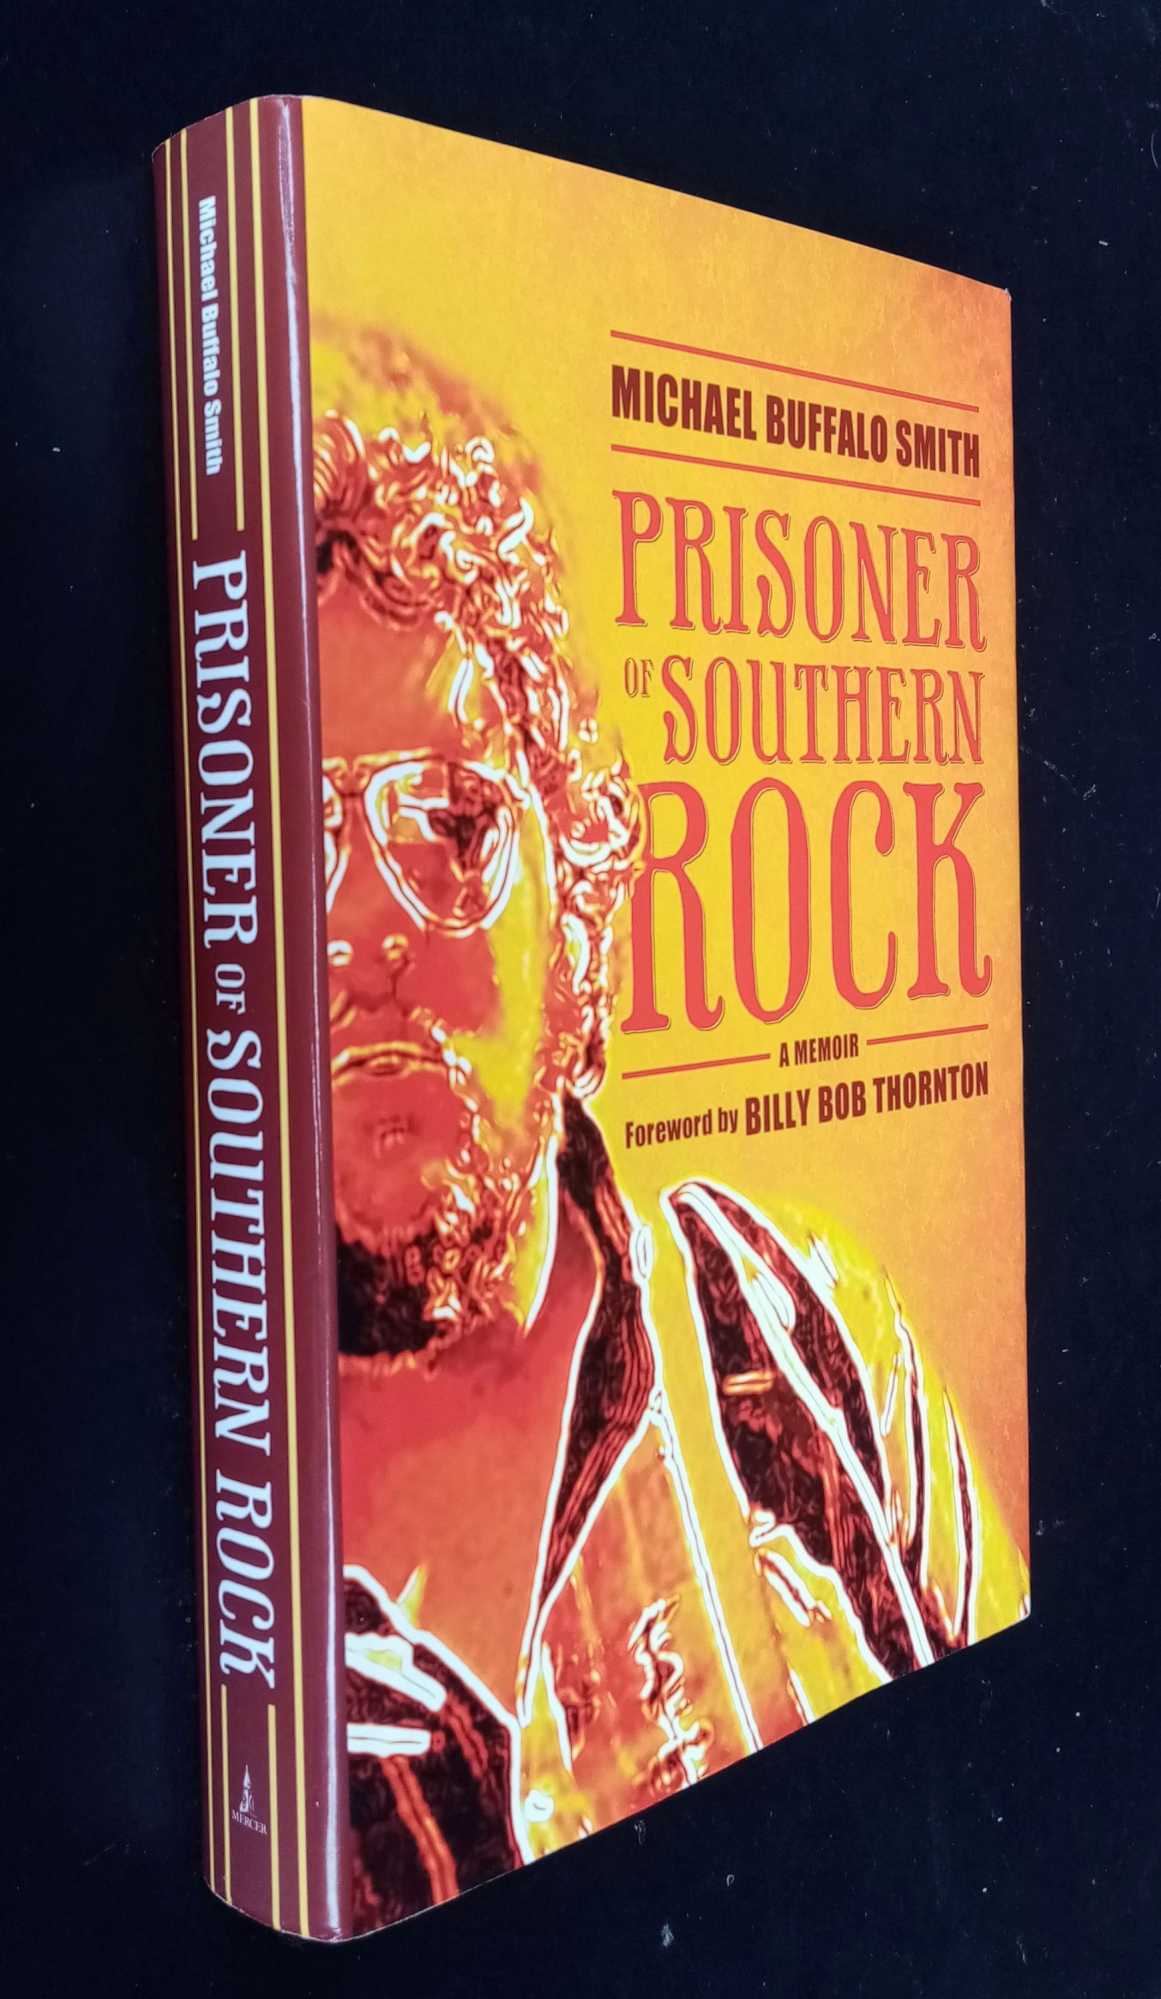 Michael Buffalo Smith - Prisoner of Southern Rock: A Memoir